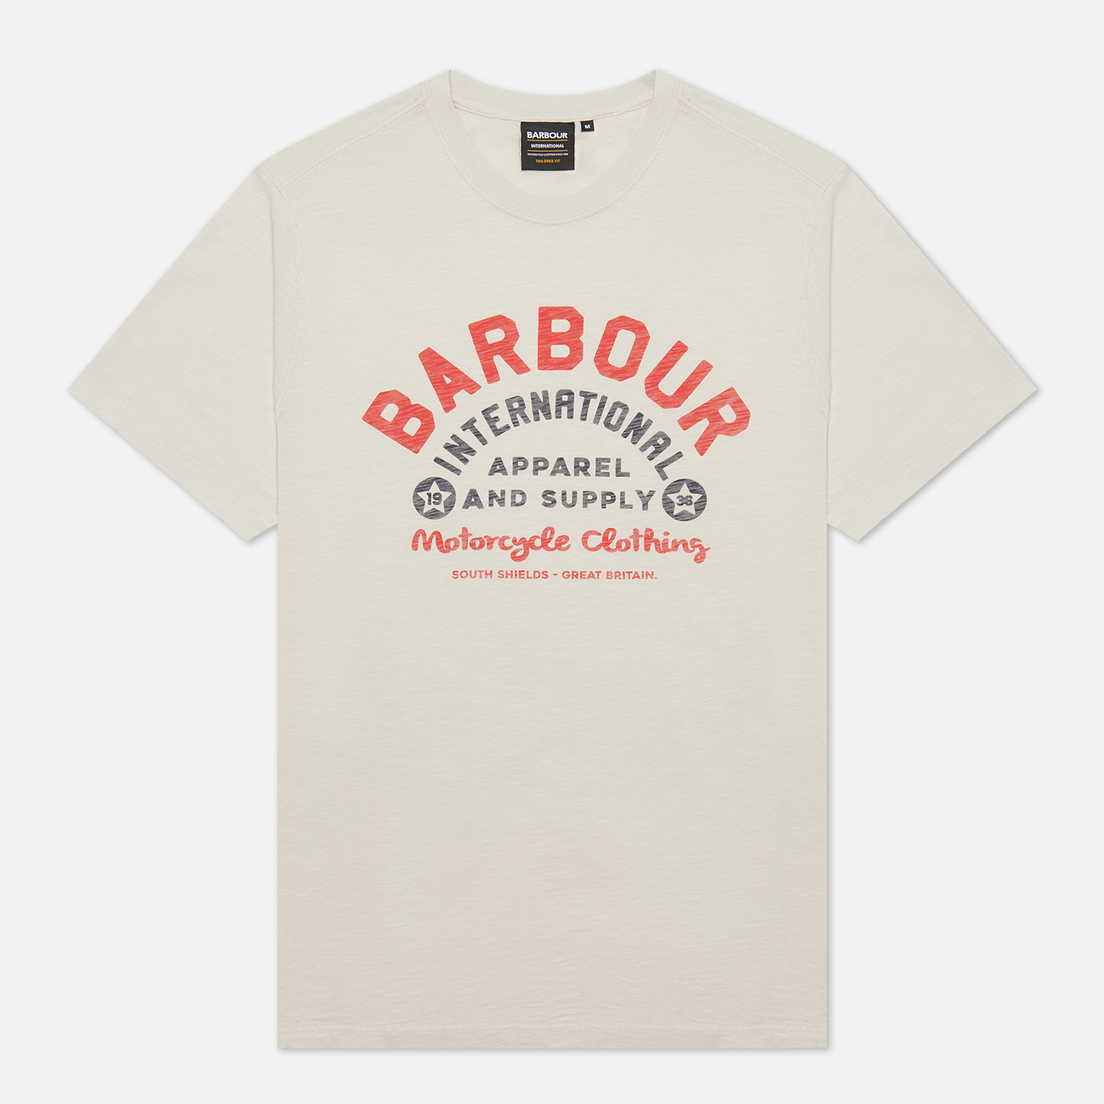 Barbour Мужская футболка International Device